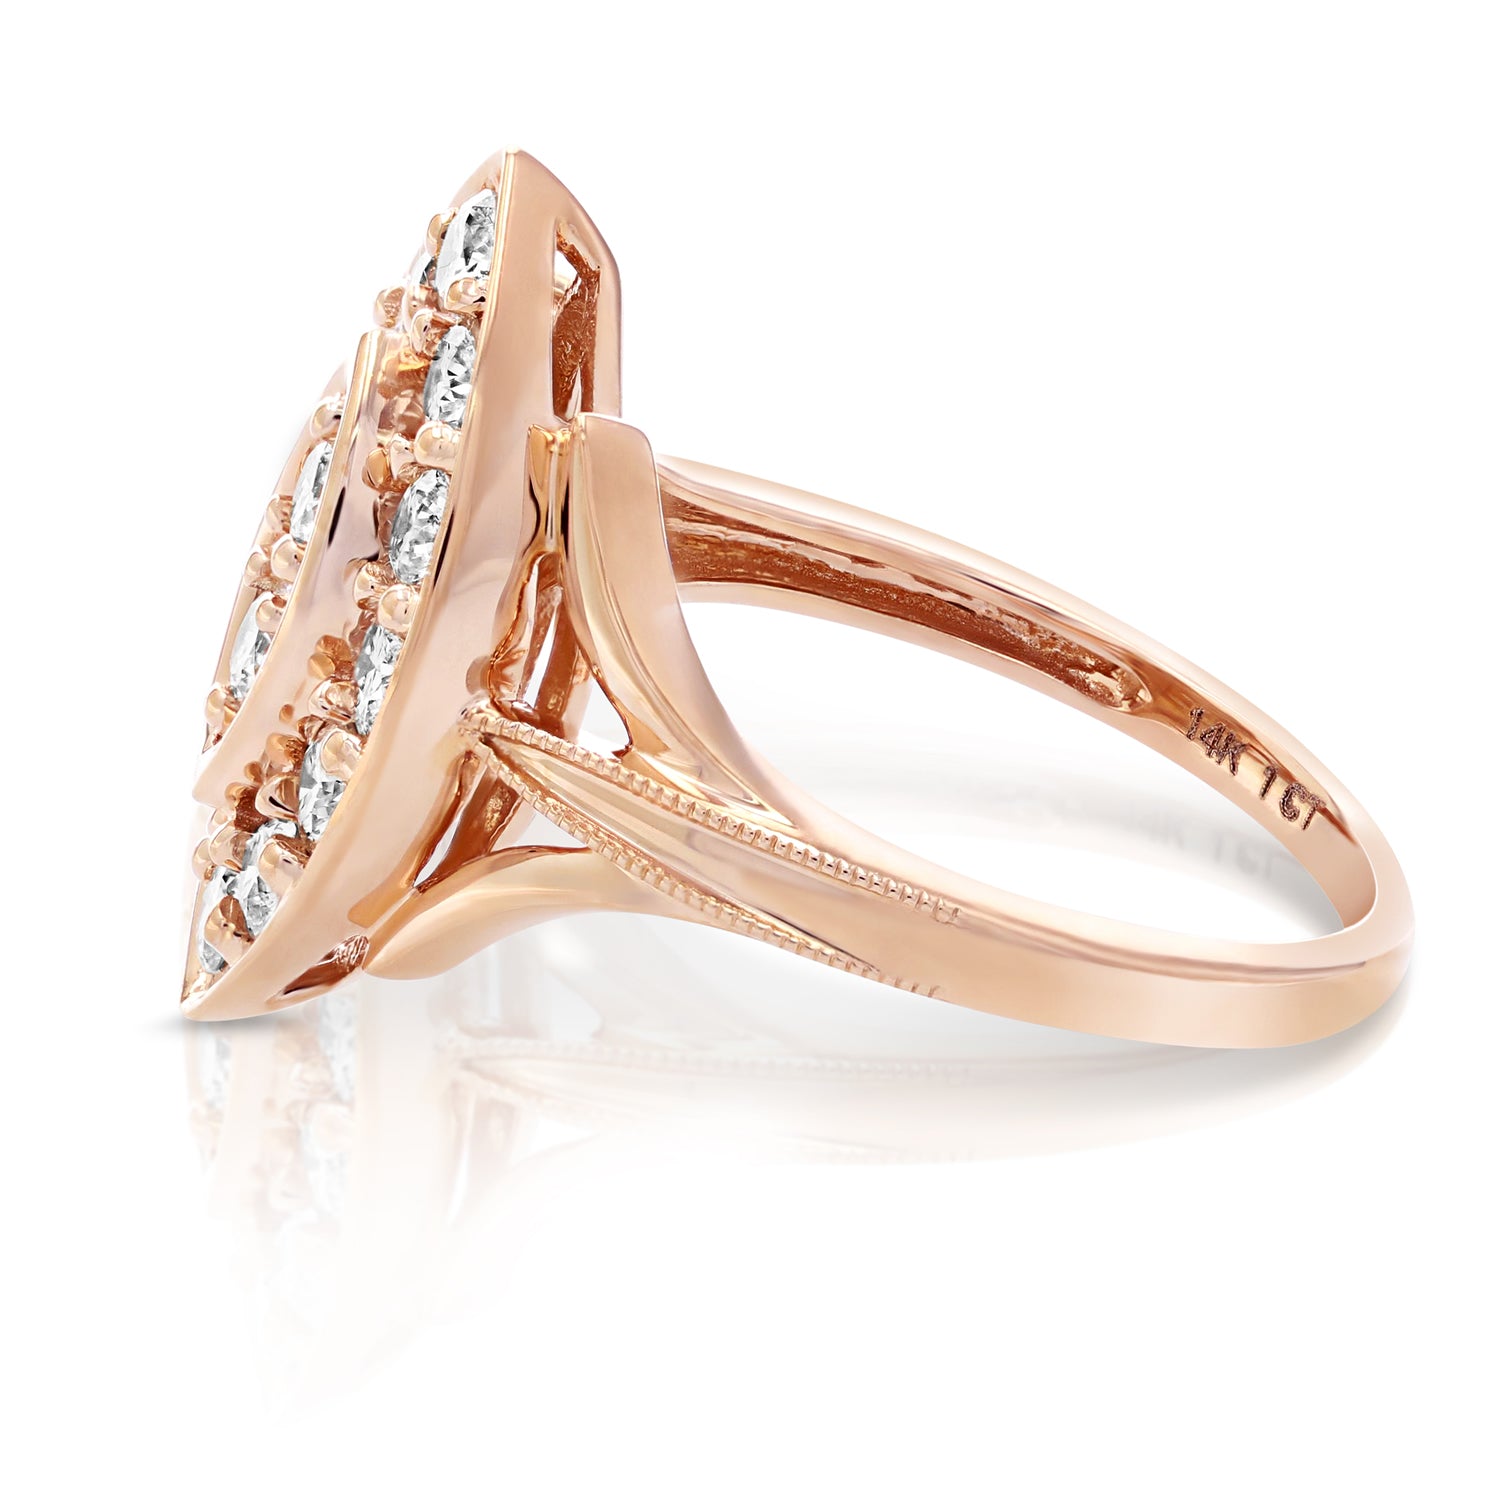 1 cttw Diamond Engagement Ring Marquise Design 14K Rose Gold Bridal Wedding